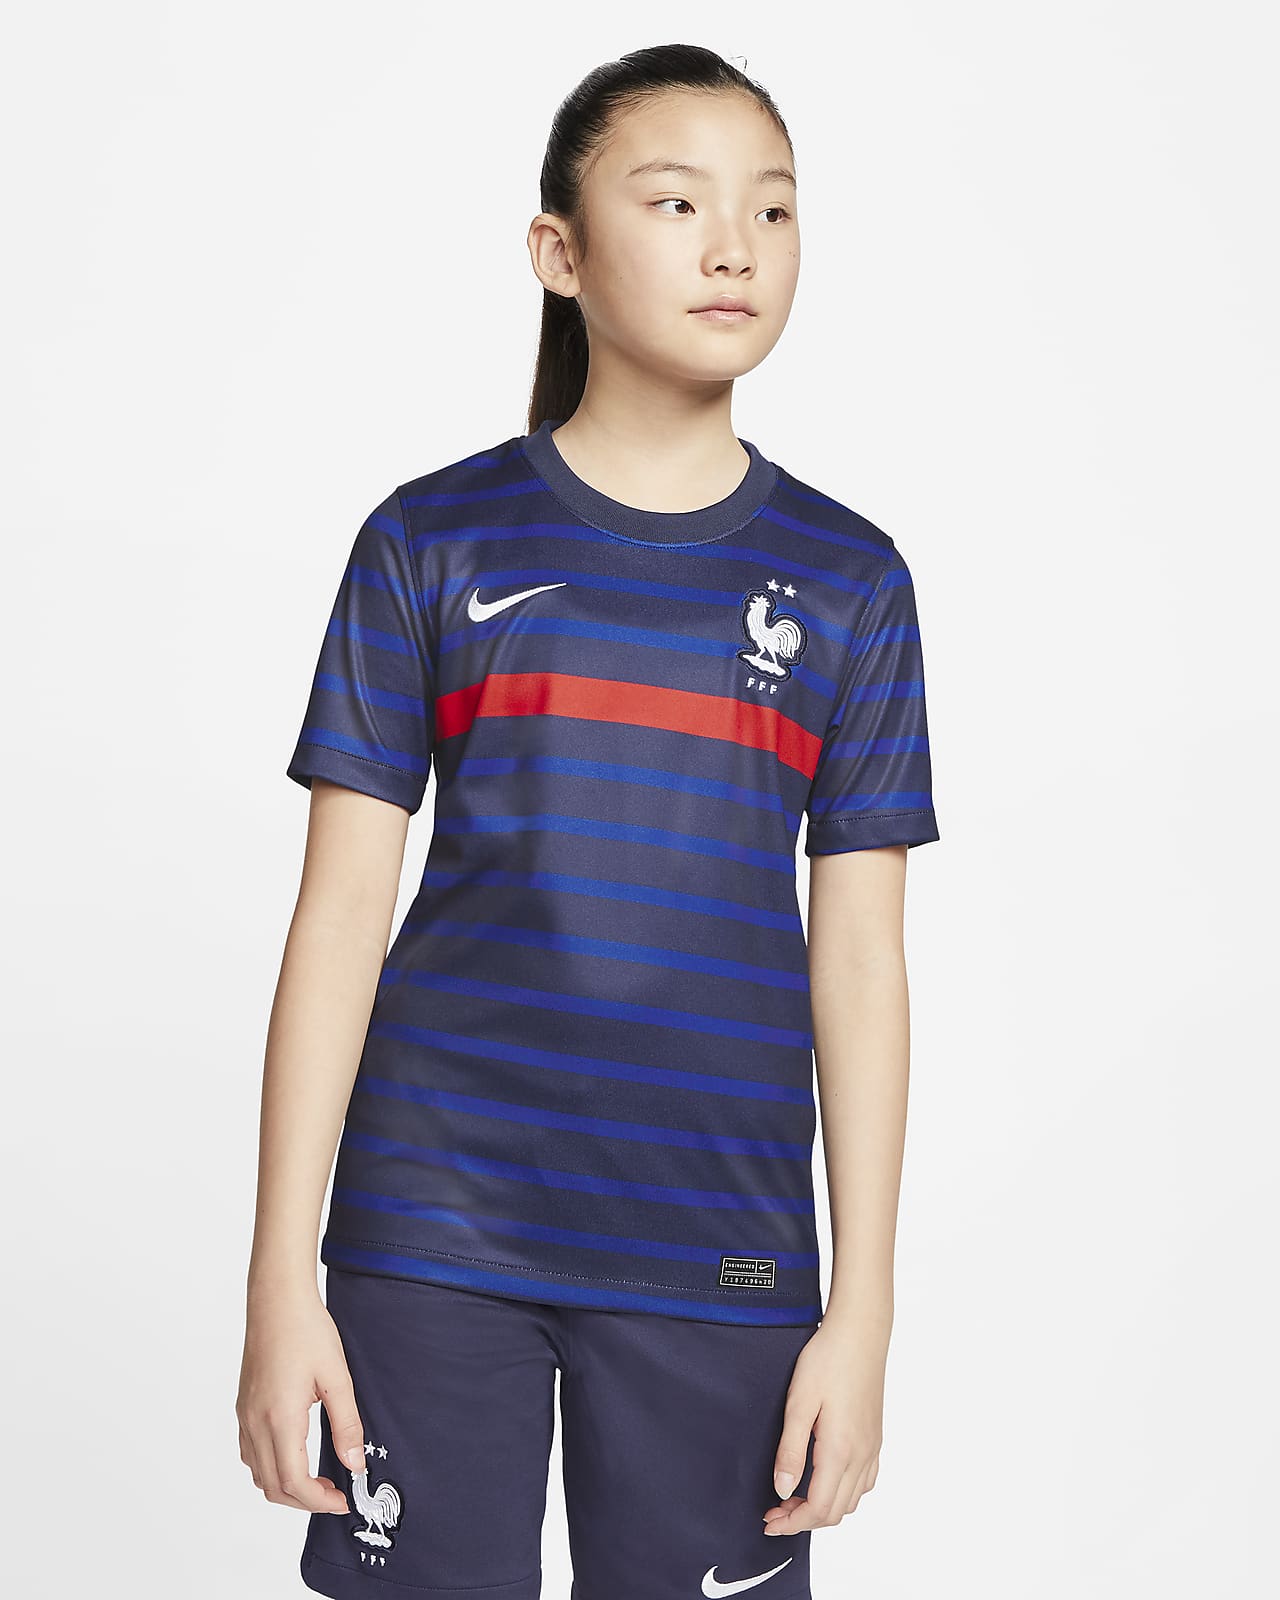 Older Kids' Football Shirt. Nike SG